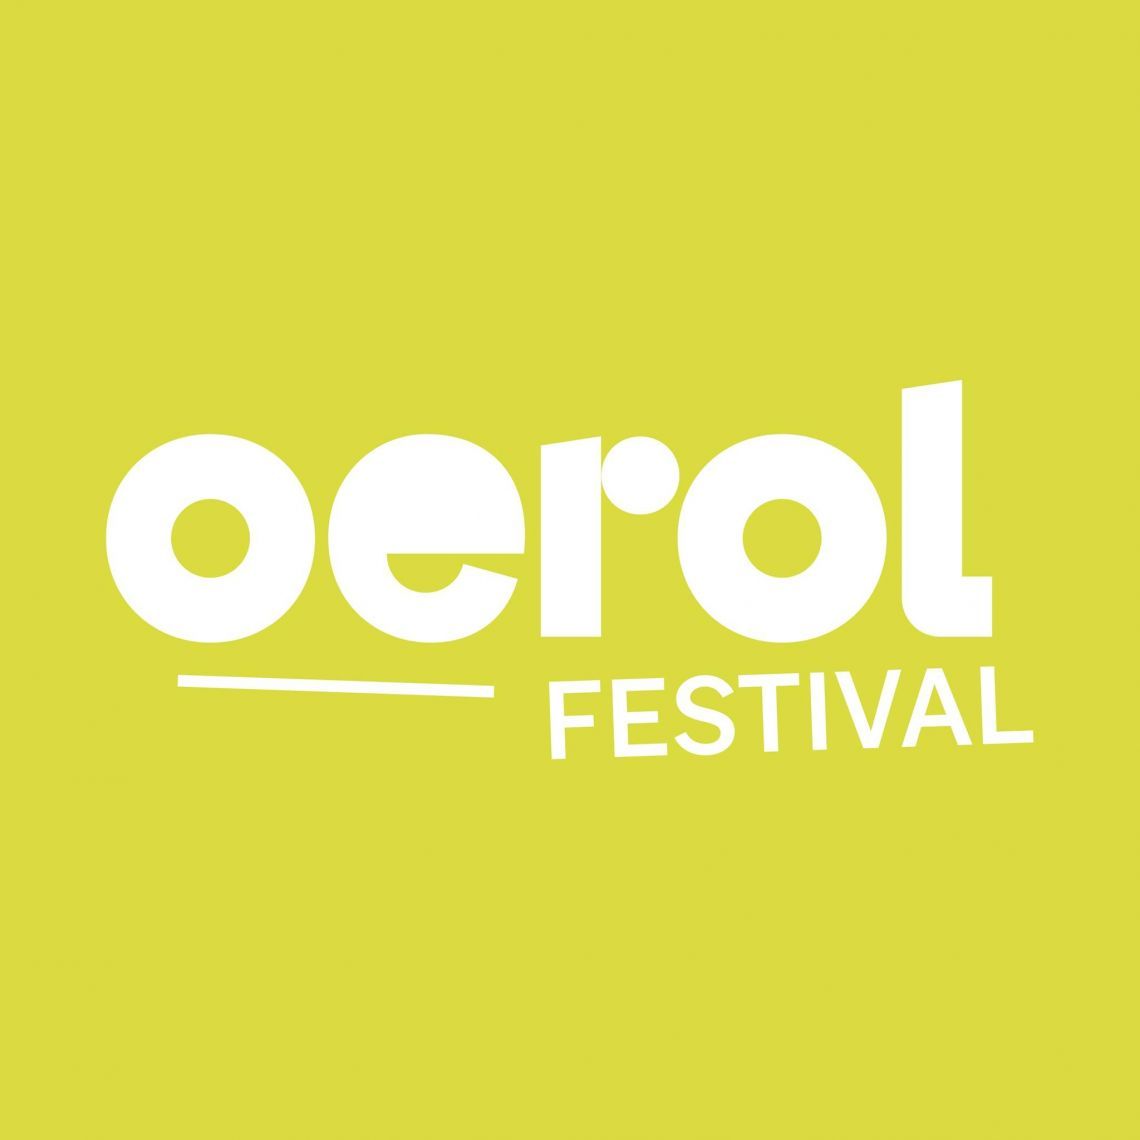 Oroel Festival